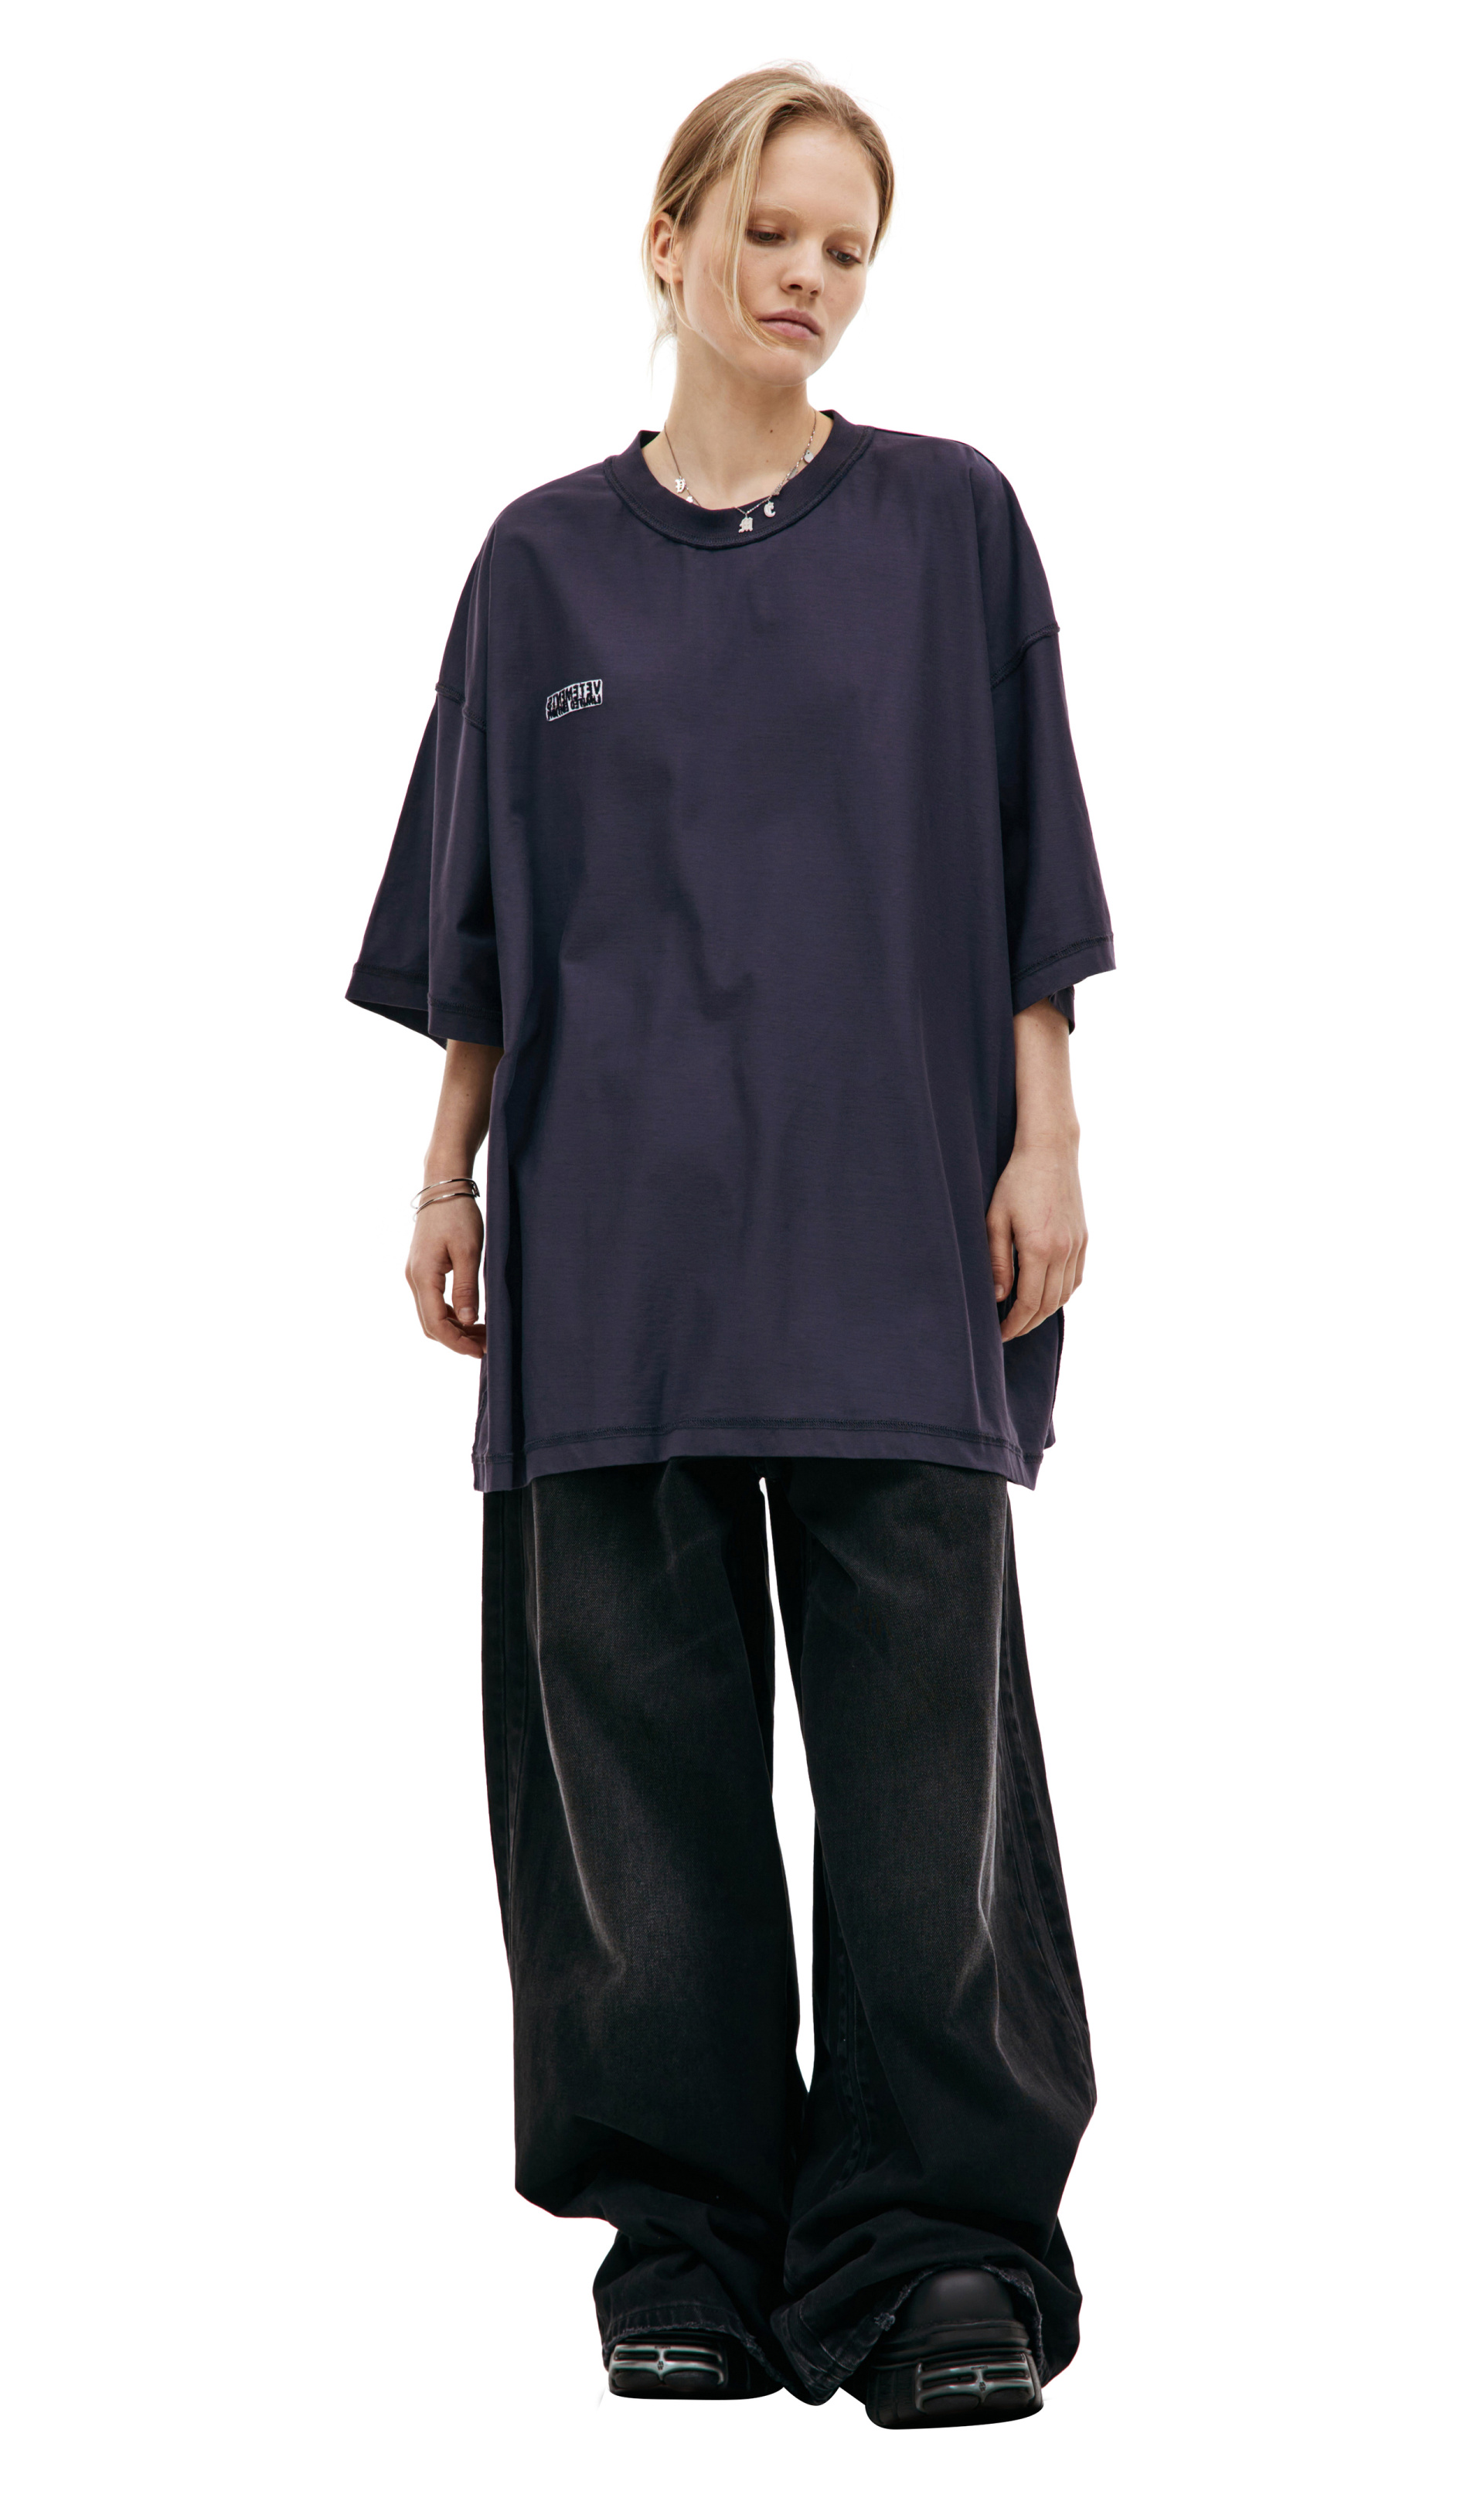 Buy SPORTY & RICH women purple serif pyjama shirt for €123 online on SV77,  PJ1011LI